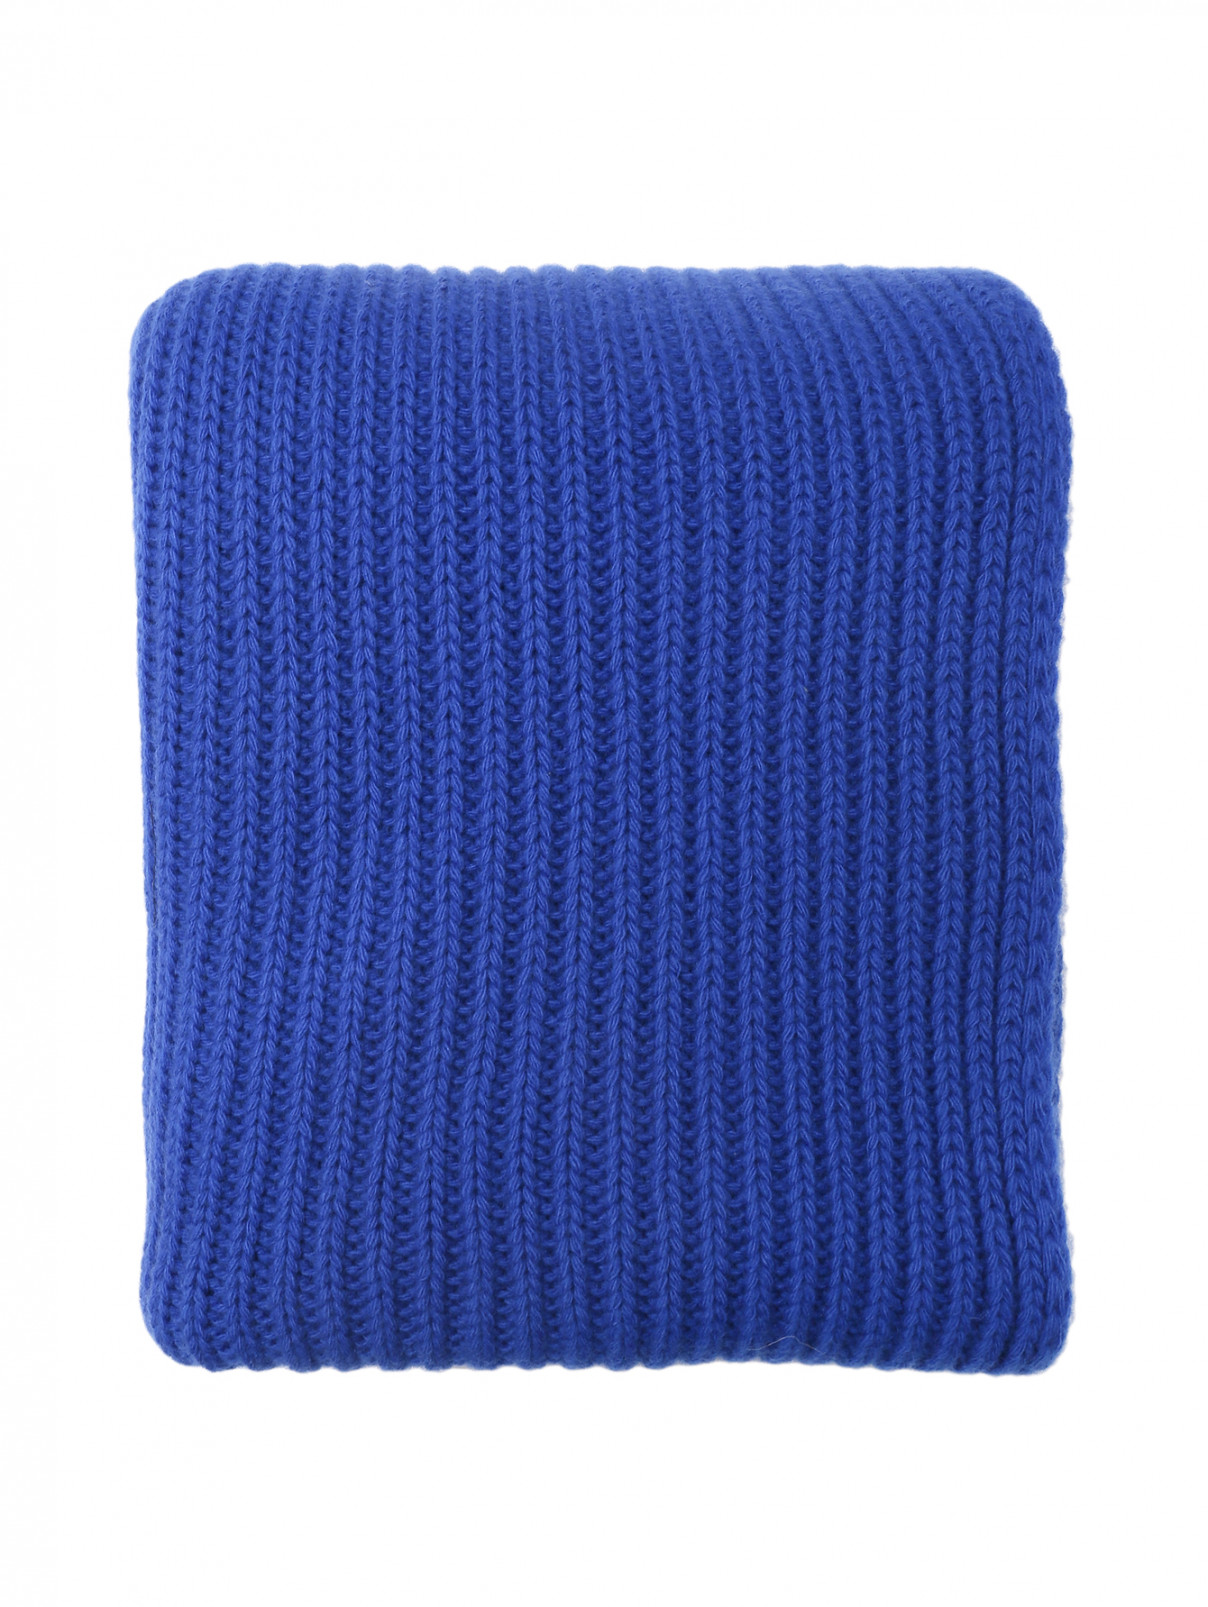 Шерстяной шарф с бахромой Weekend Max Mara  –  Общий вид  – Цвет:  Синий